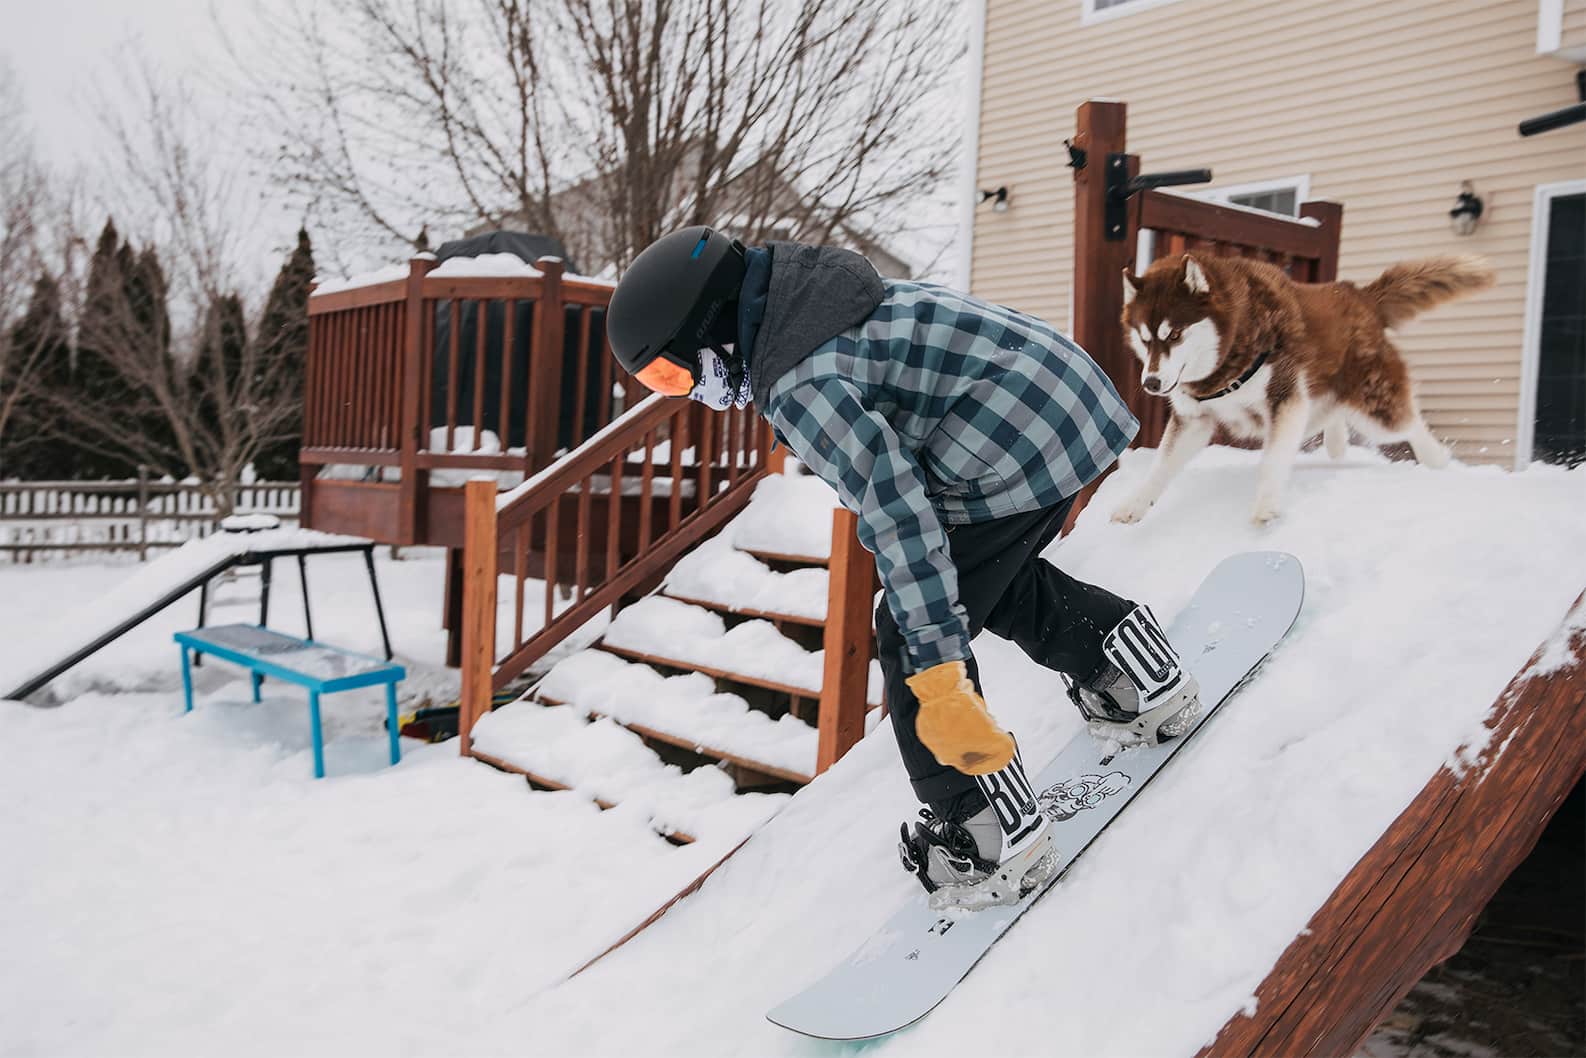 How to Build a Backyard Terrain Park for Snowboarding | Burton Snowboards